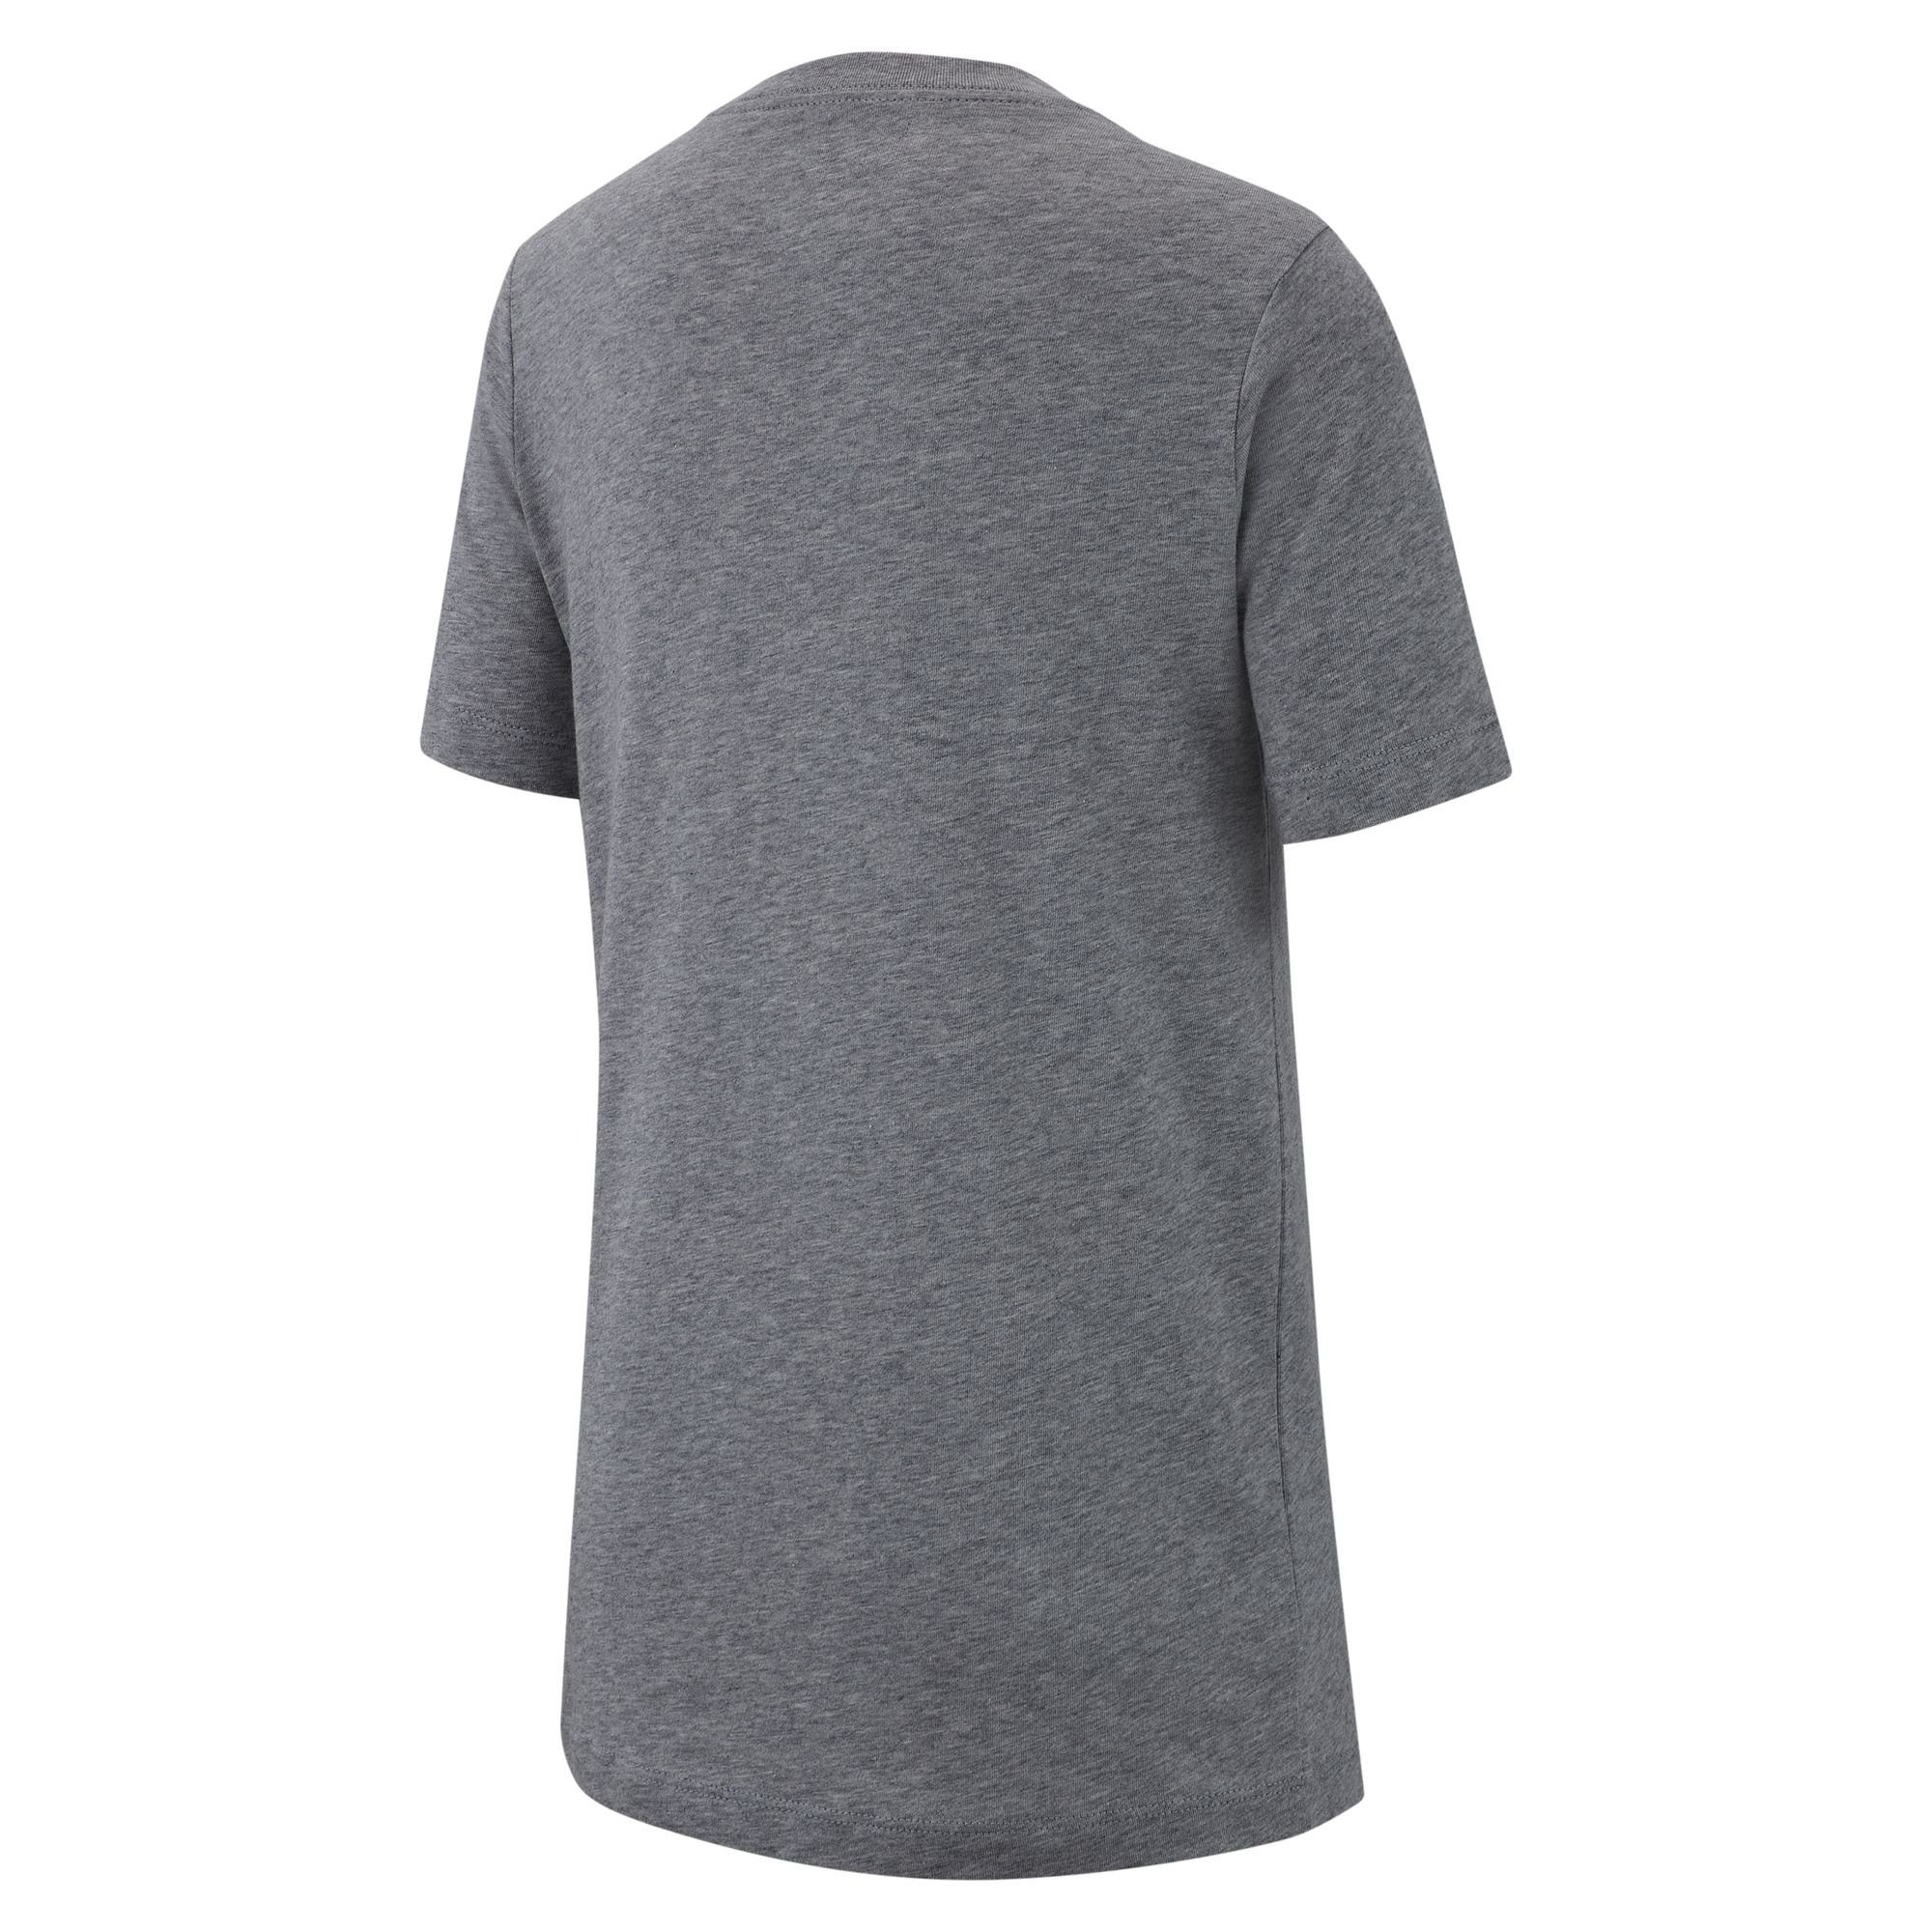 Nike Sportswear T-Shirt BIG KIDS' T-SHIRT grau-meliert